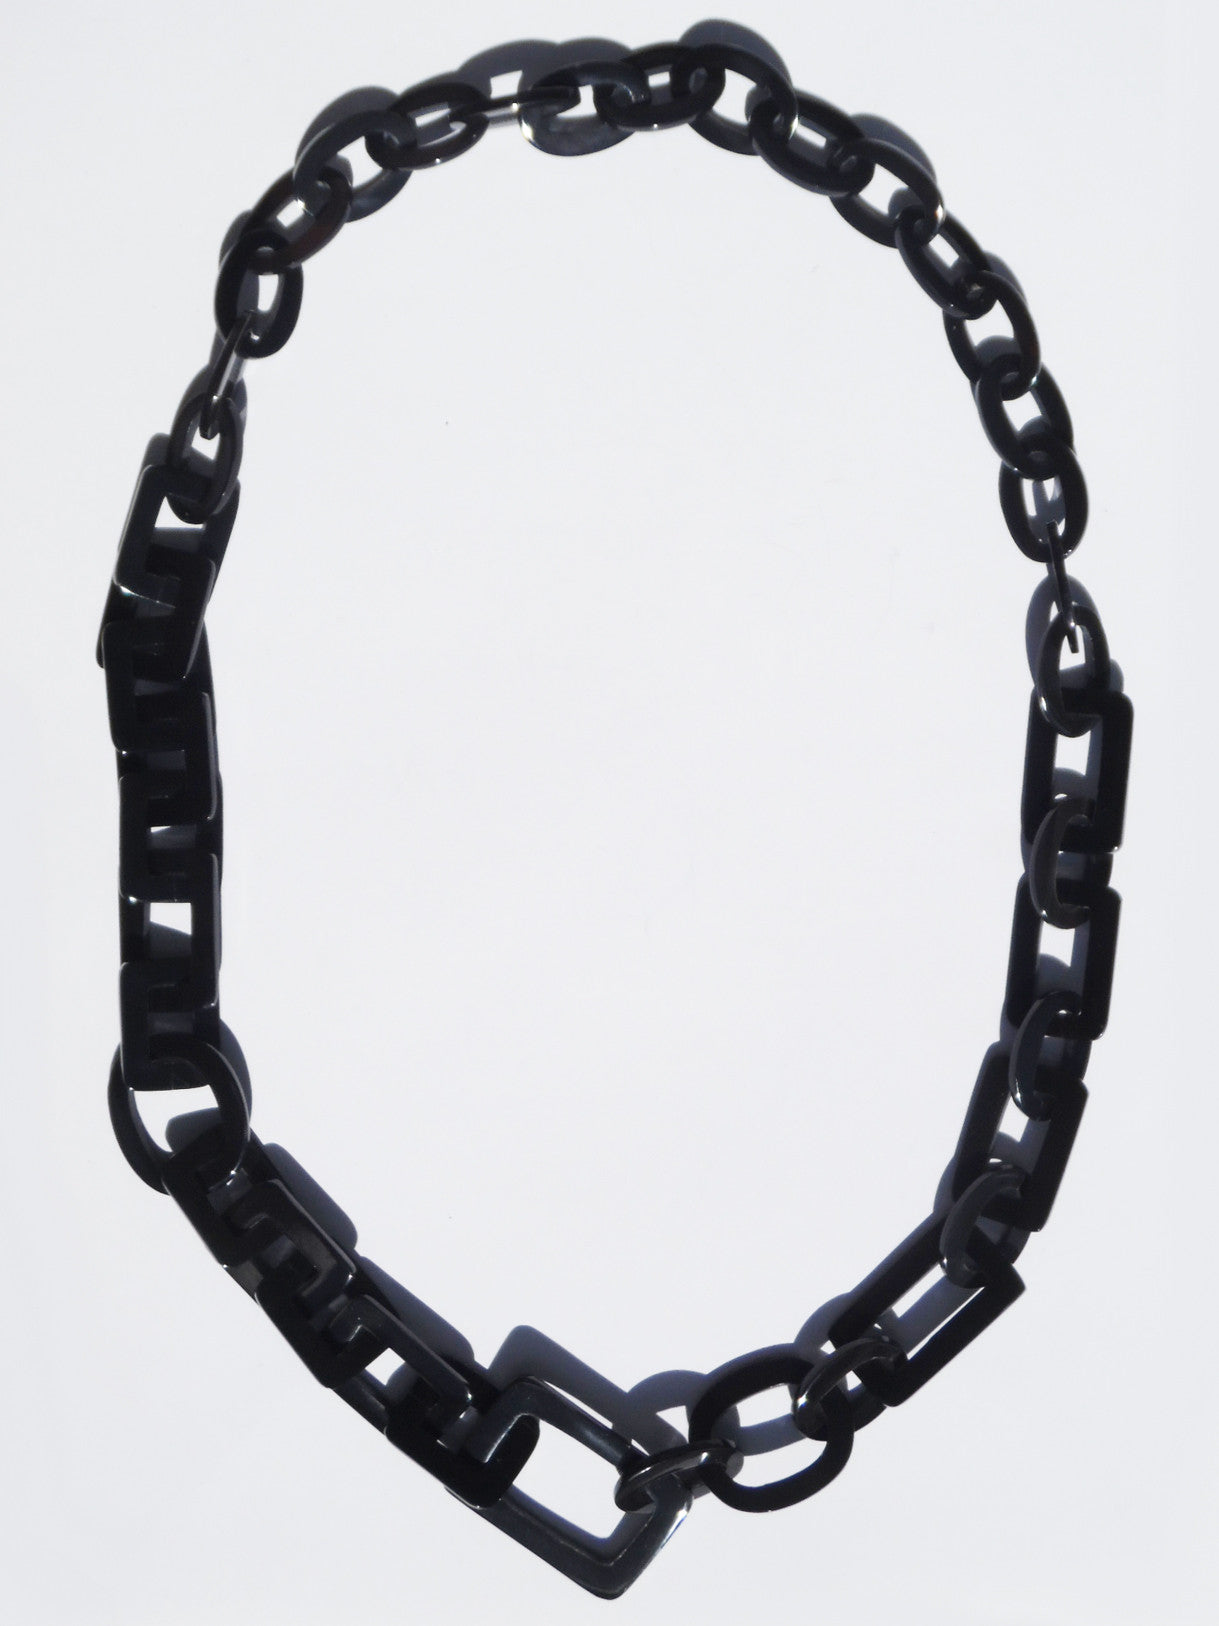 Horn Necklace Rectangle Links Black